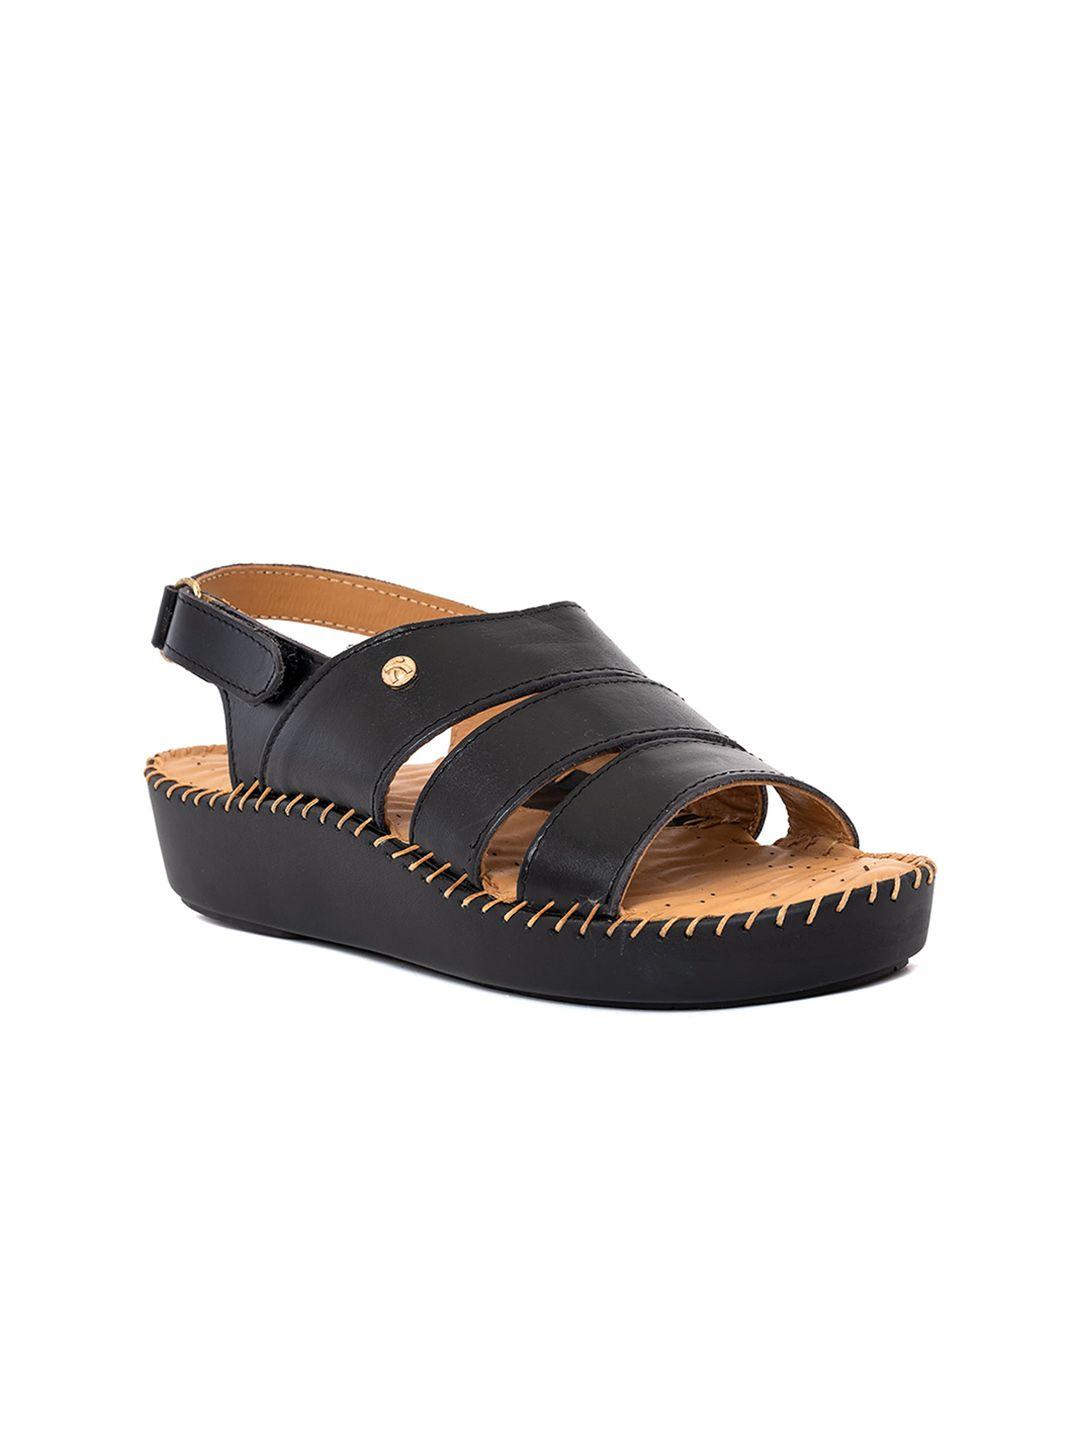 khadims open toe leather platform heels with buckles